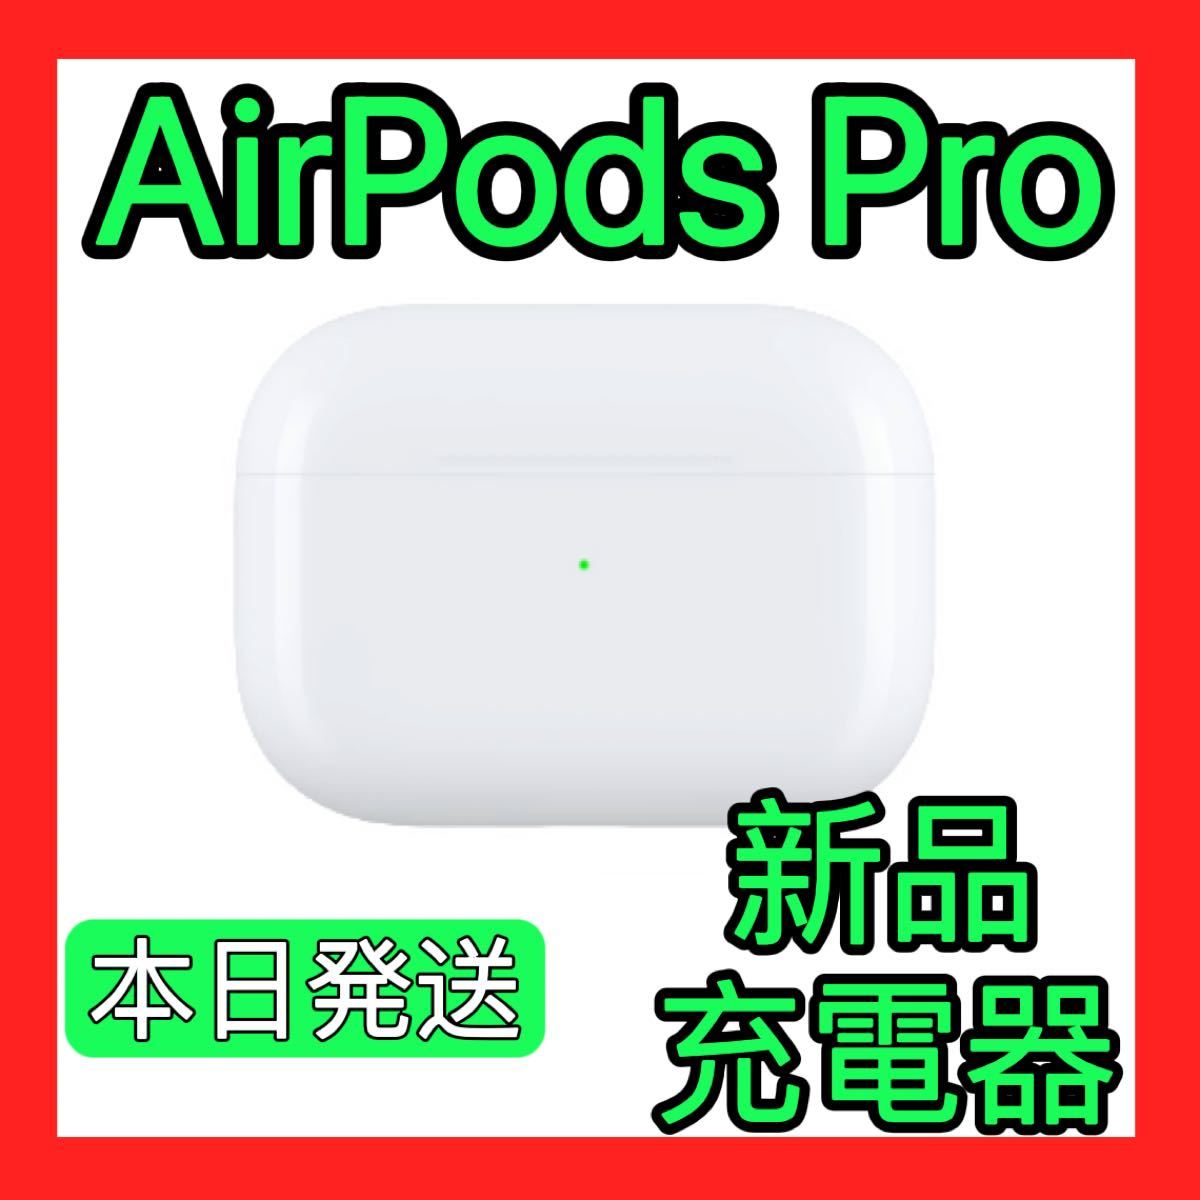 Apple純正品 エアーポッズプロ 第一世代 充電ケースのみ AirPods Pro - pharmacube.jp